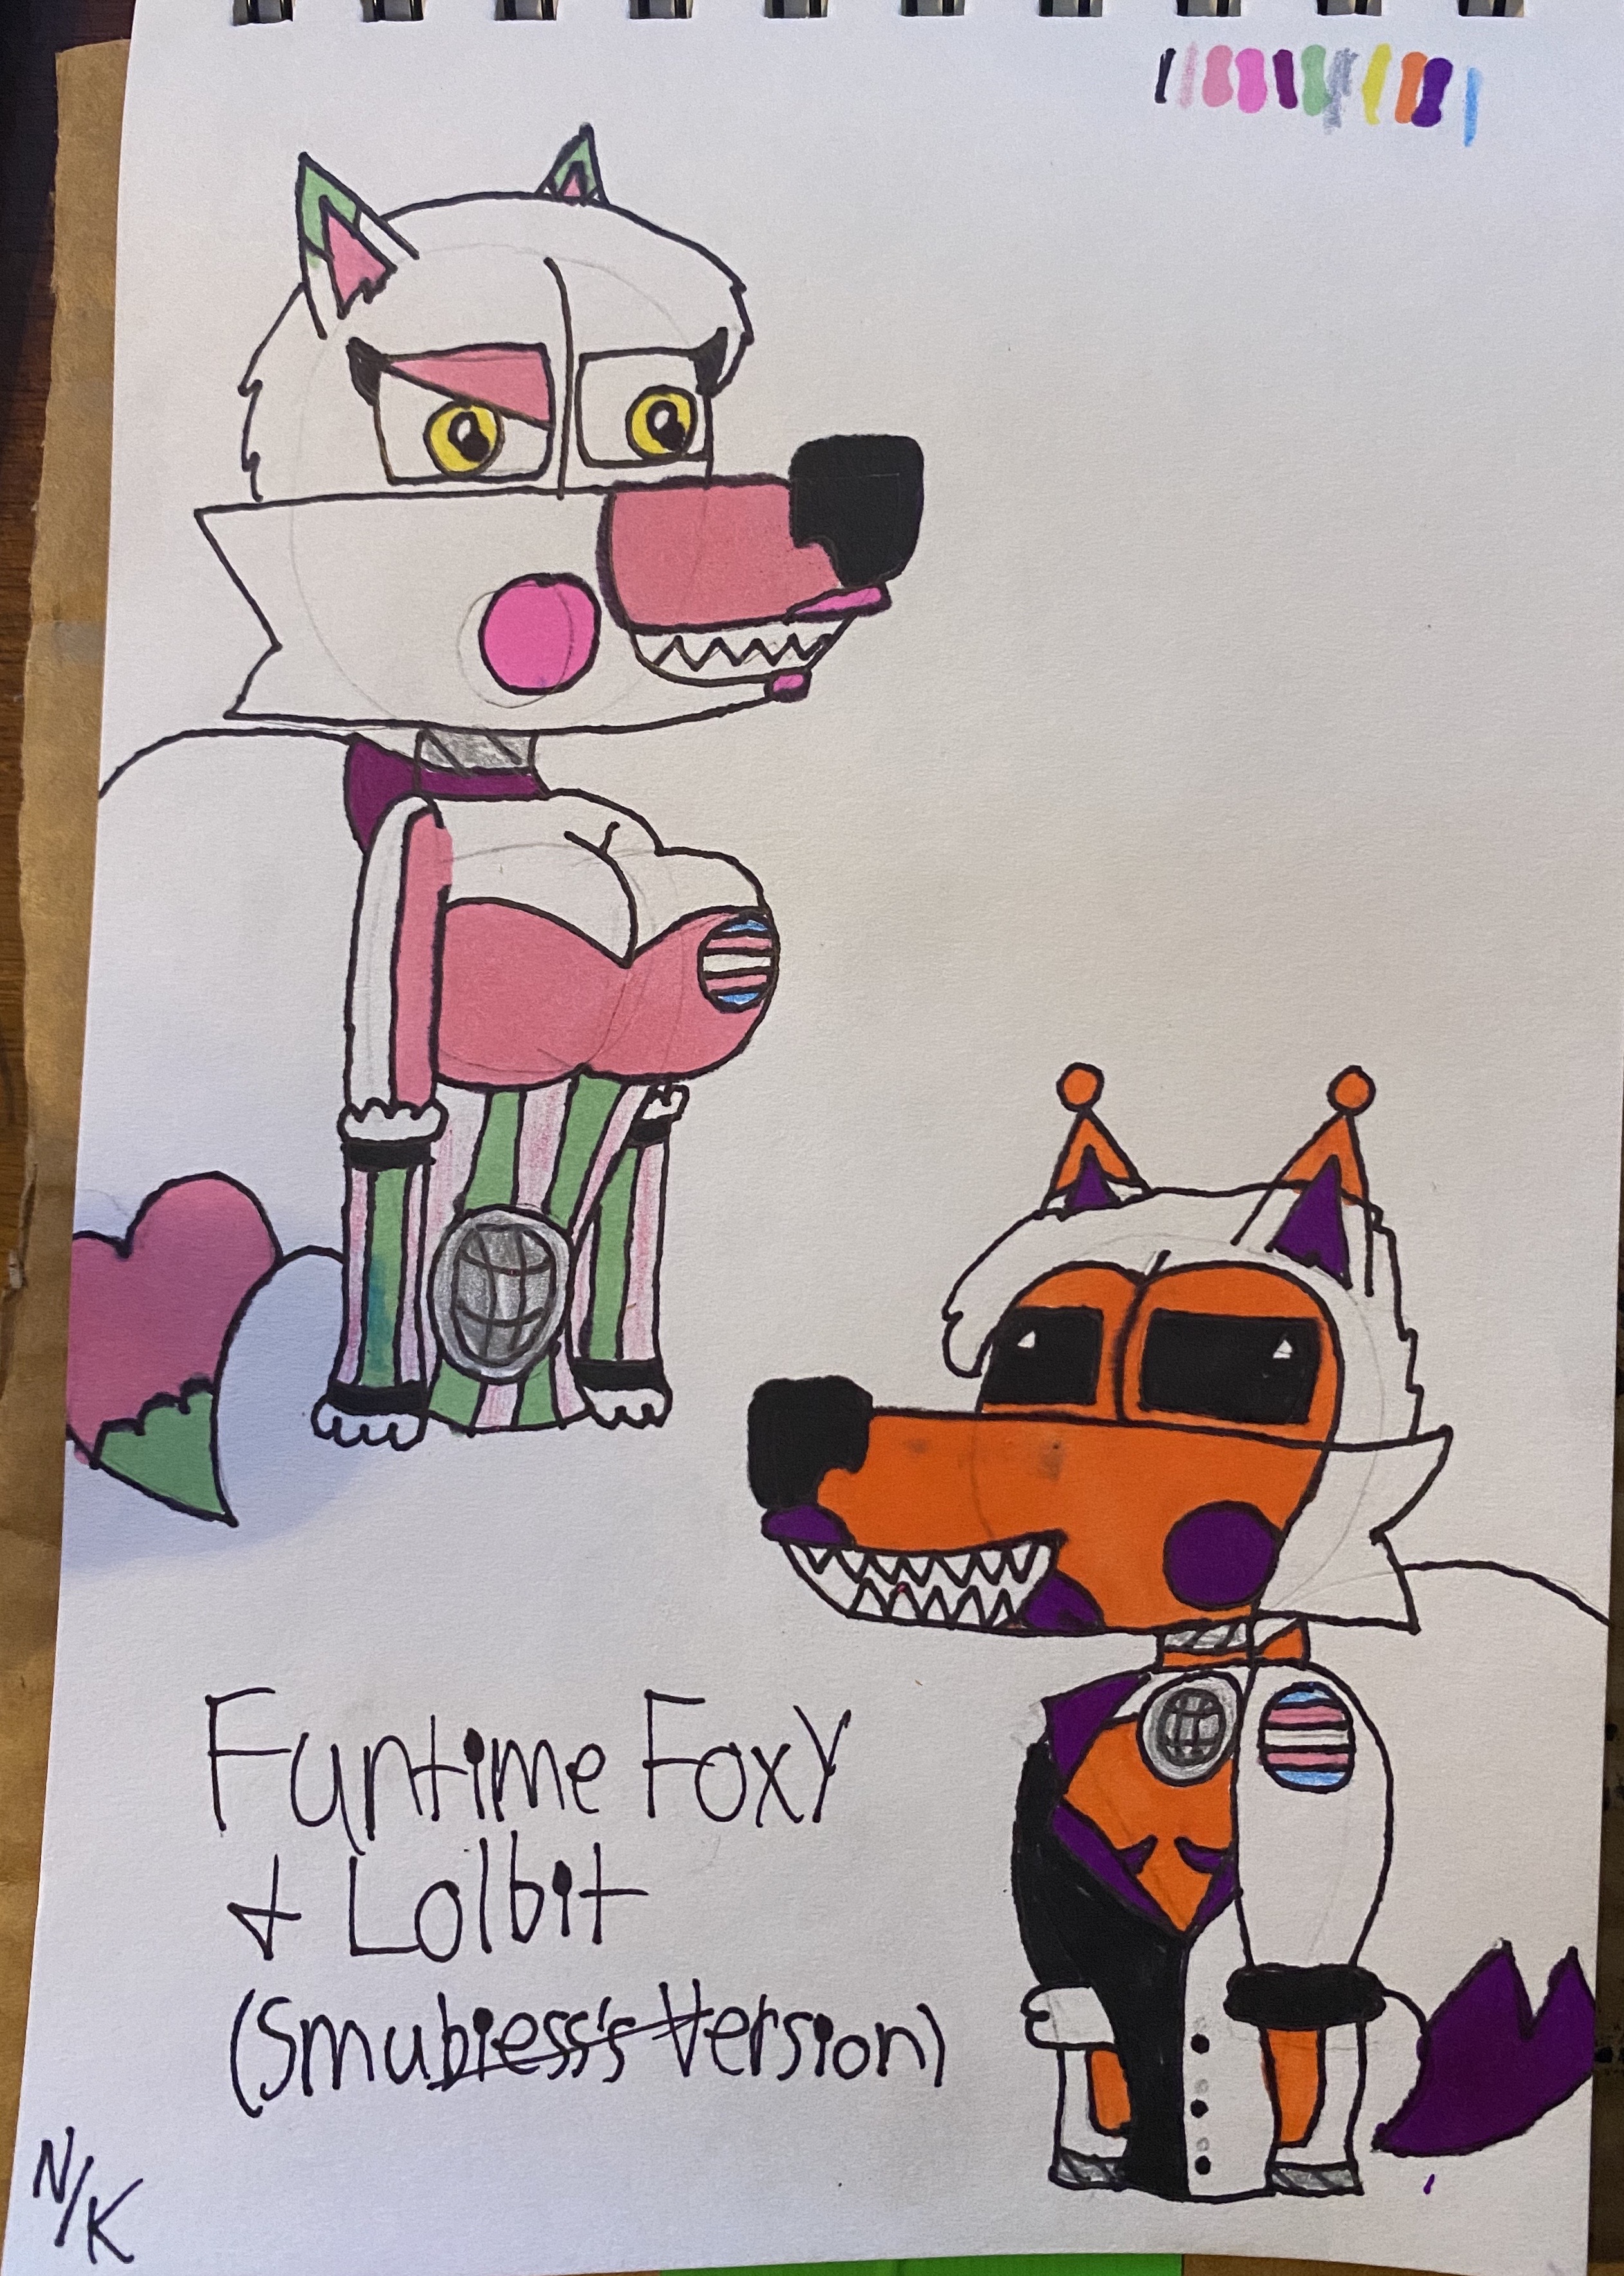 Lolbit and Funtime foxy AU genders by ThegodOfVines21 on DeviantArt